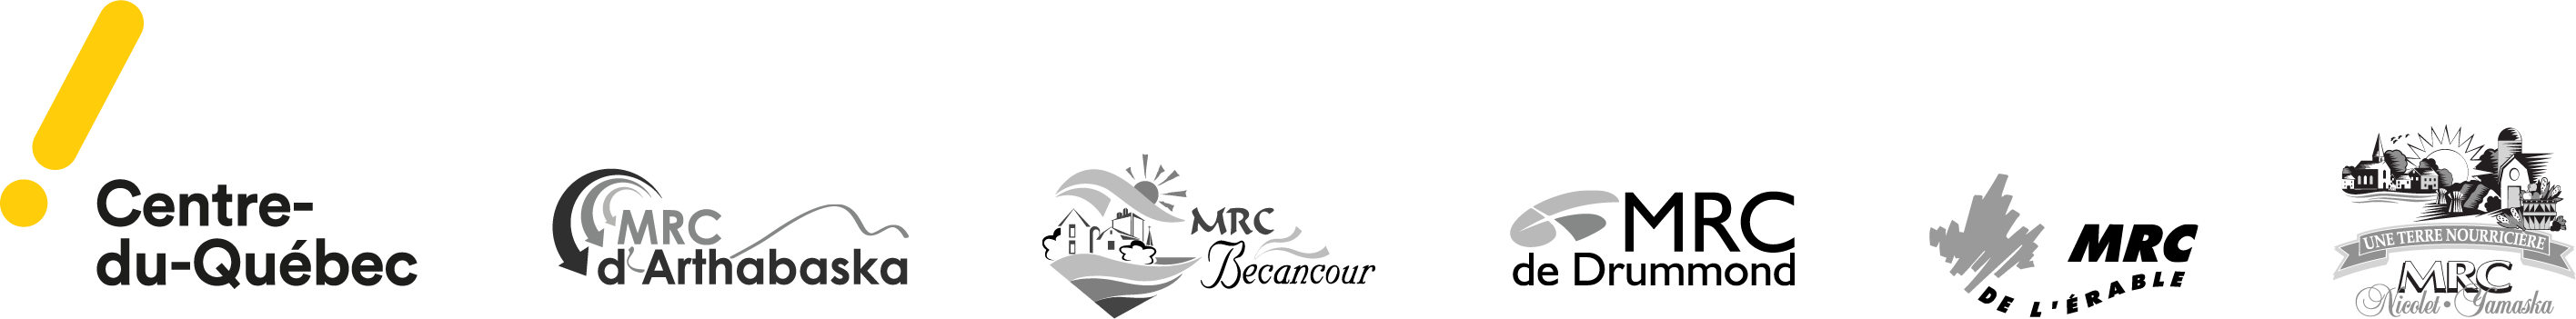 Logo du Centre-du-Québec. Logo de la MRC d'Arthabaska. Logo de la MRC de Bécancour. Logo de la MRC de Drummond. Logo de la MRC de L'Érable. Logo de la MRC de Nicolet-Yamaska.